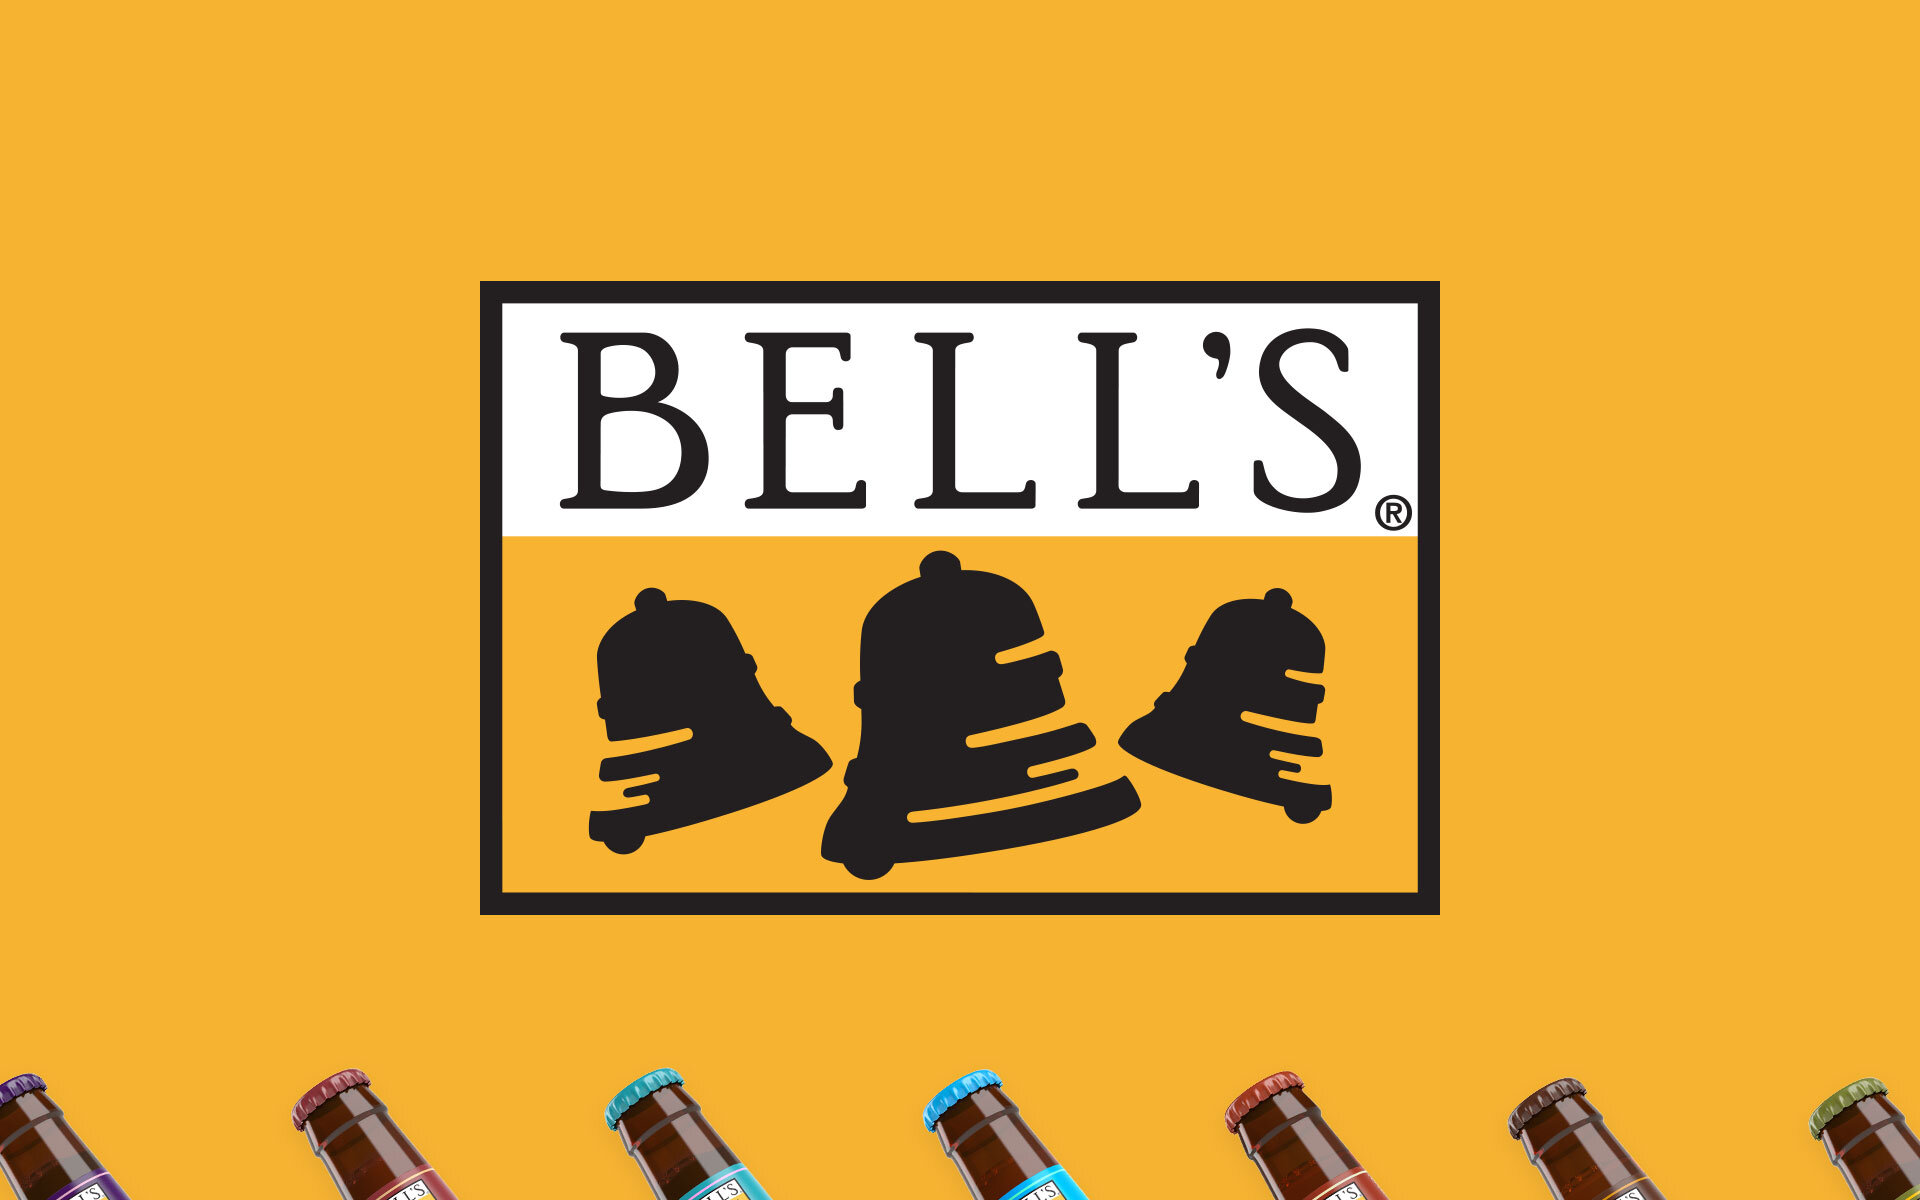 Bell's Brewery logo